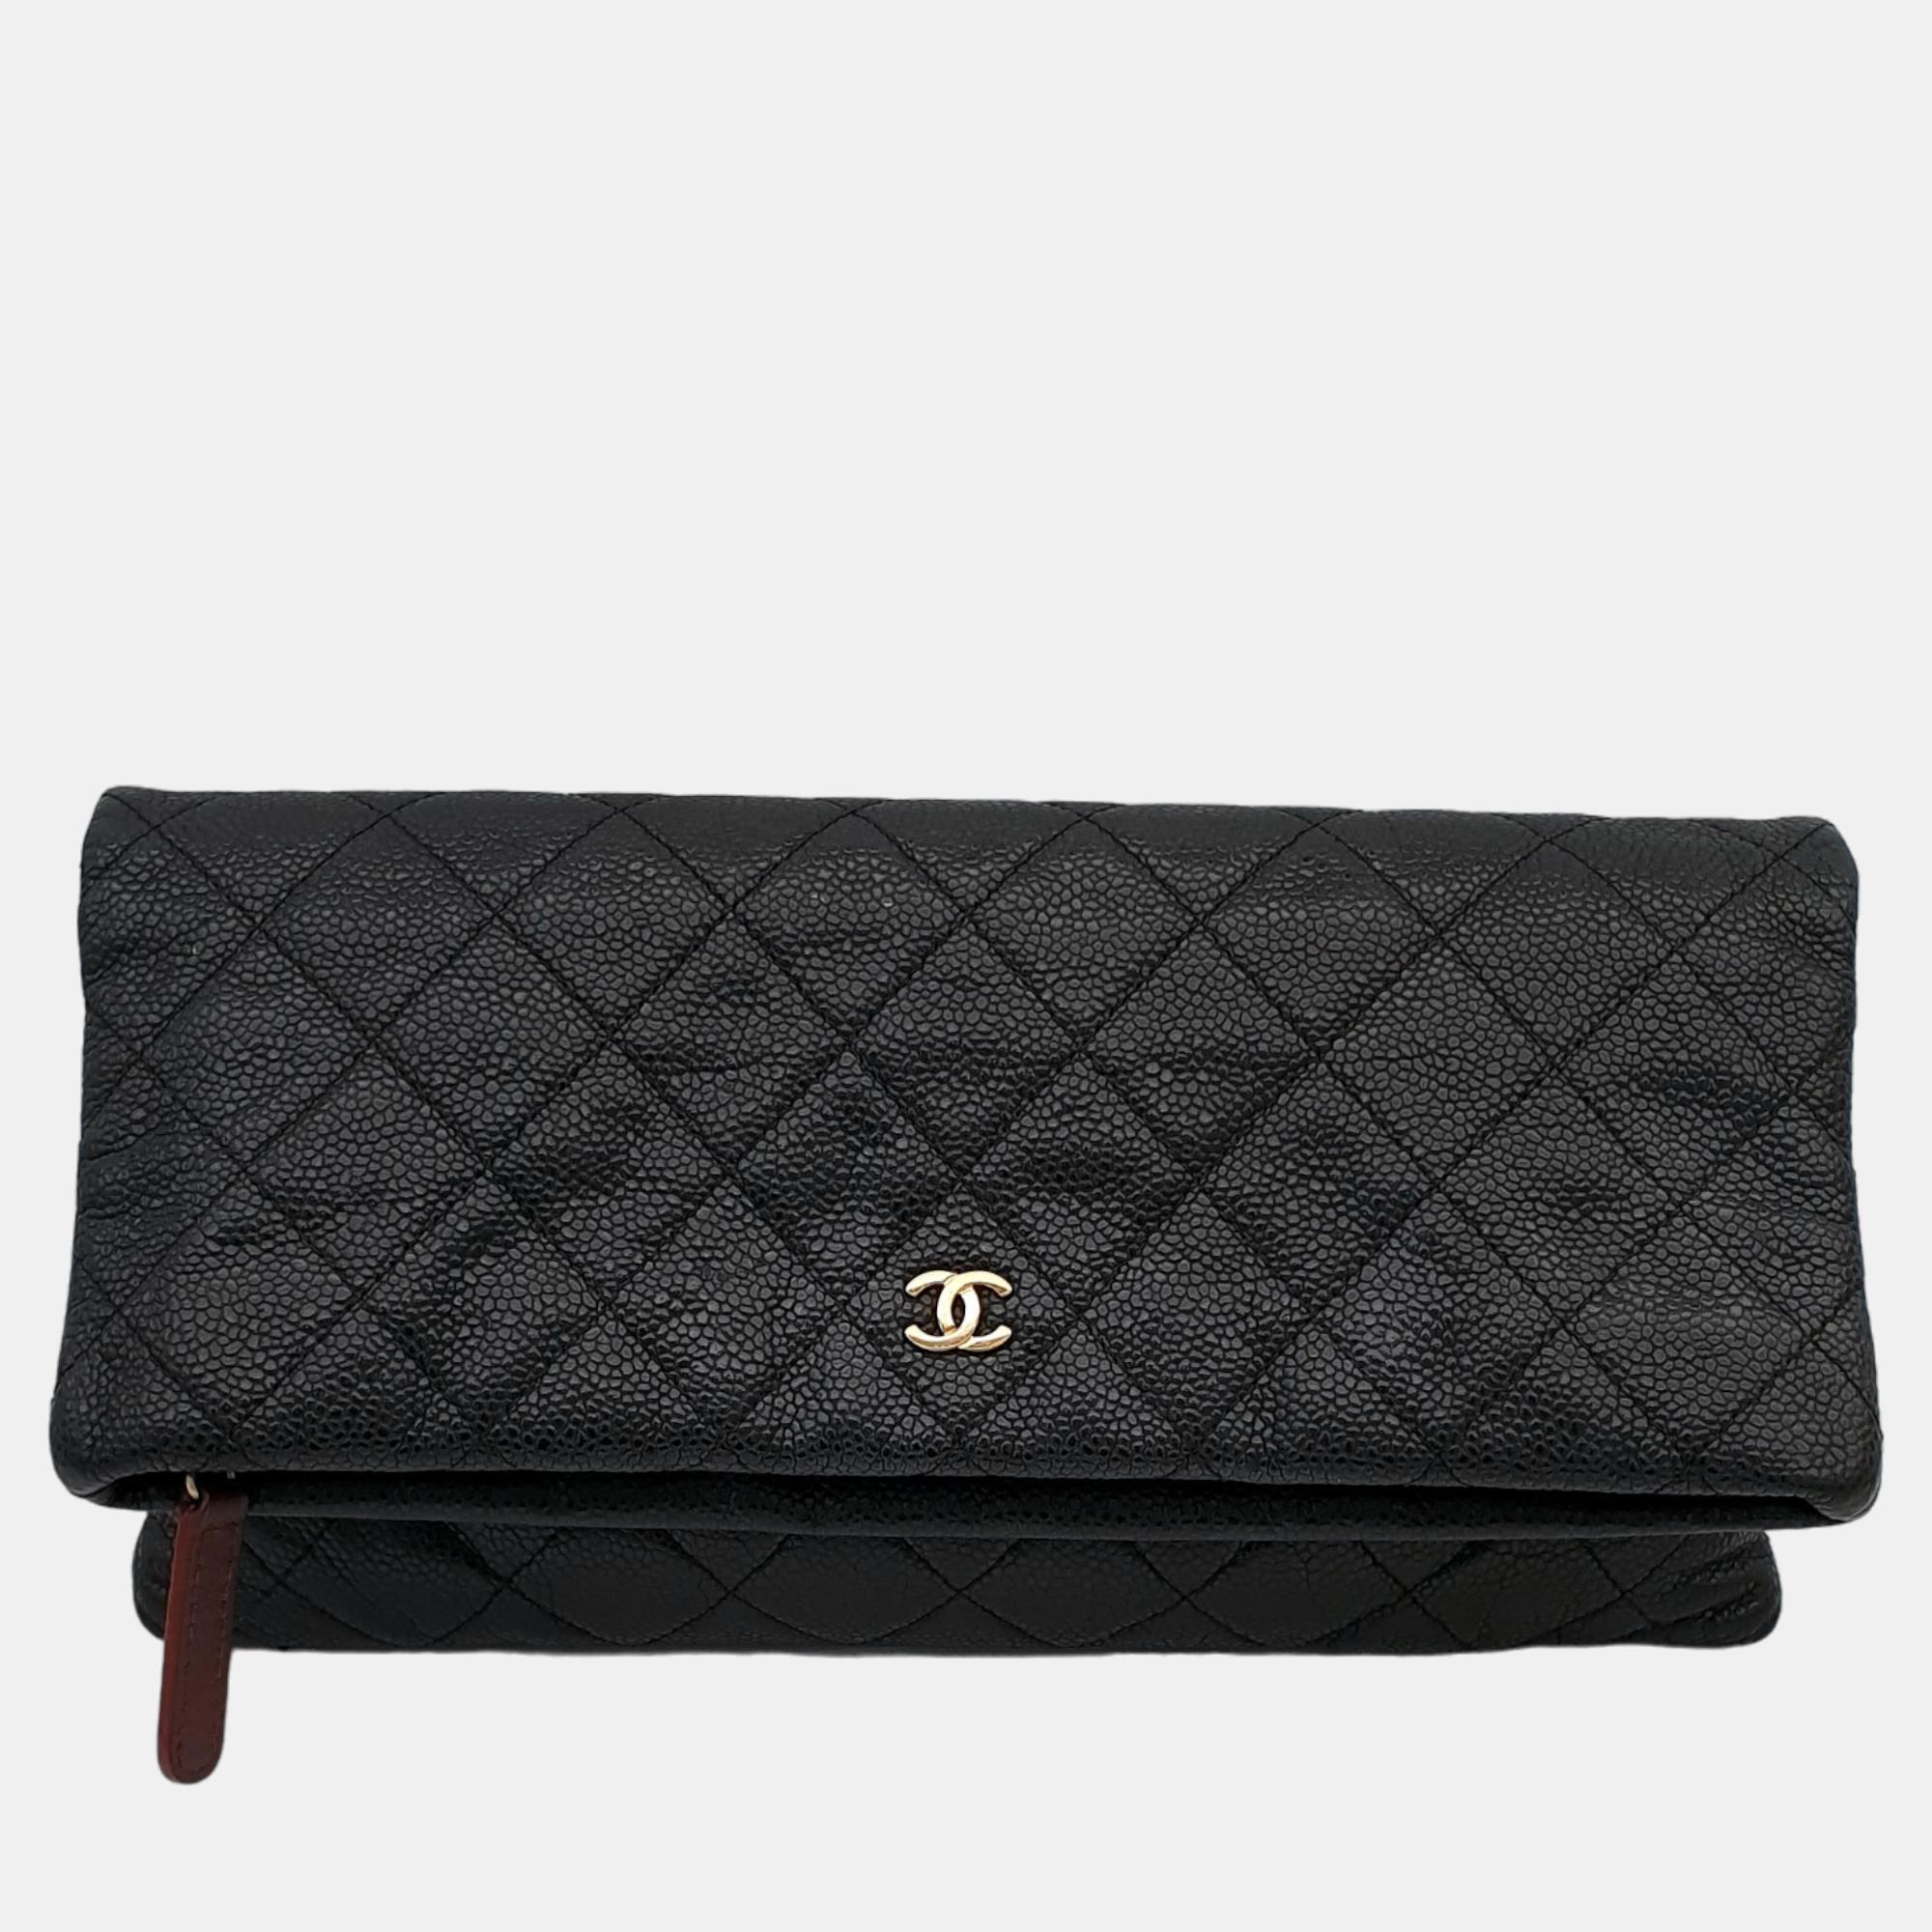 Chanel black leather beauty cc foldover clutch bag